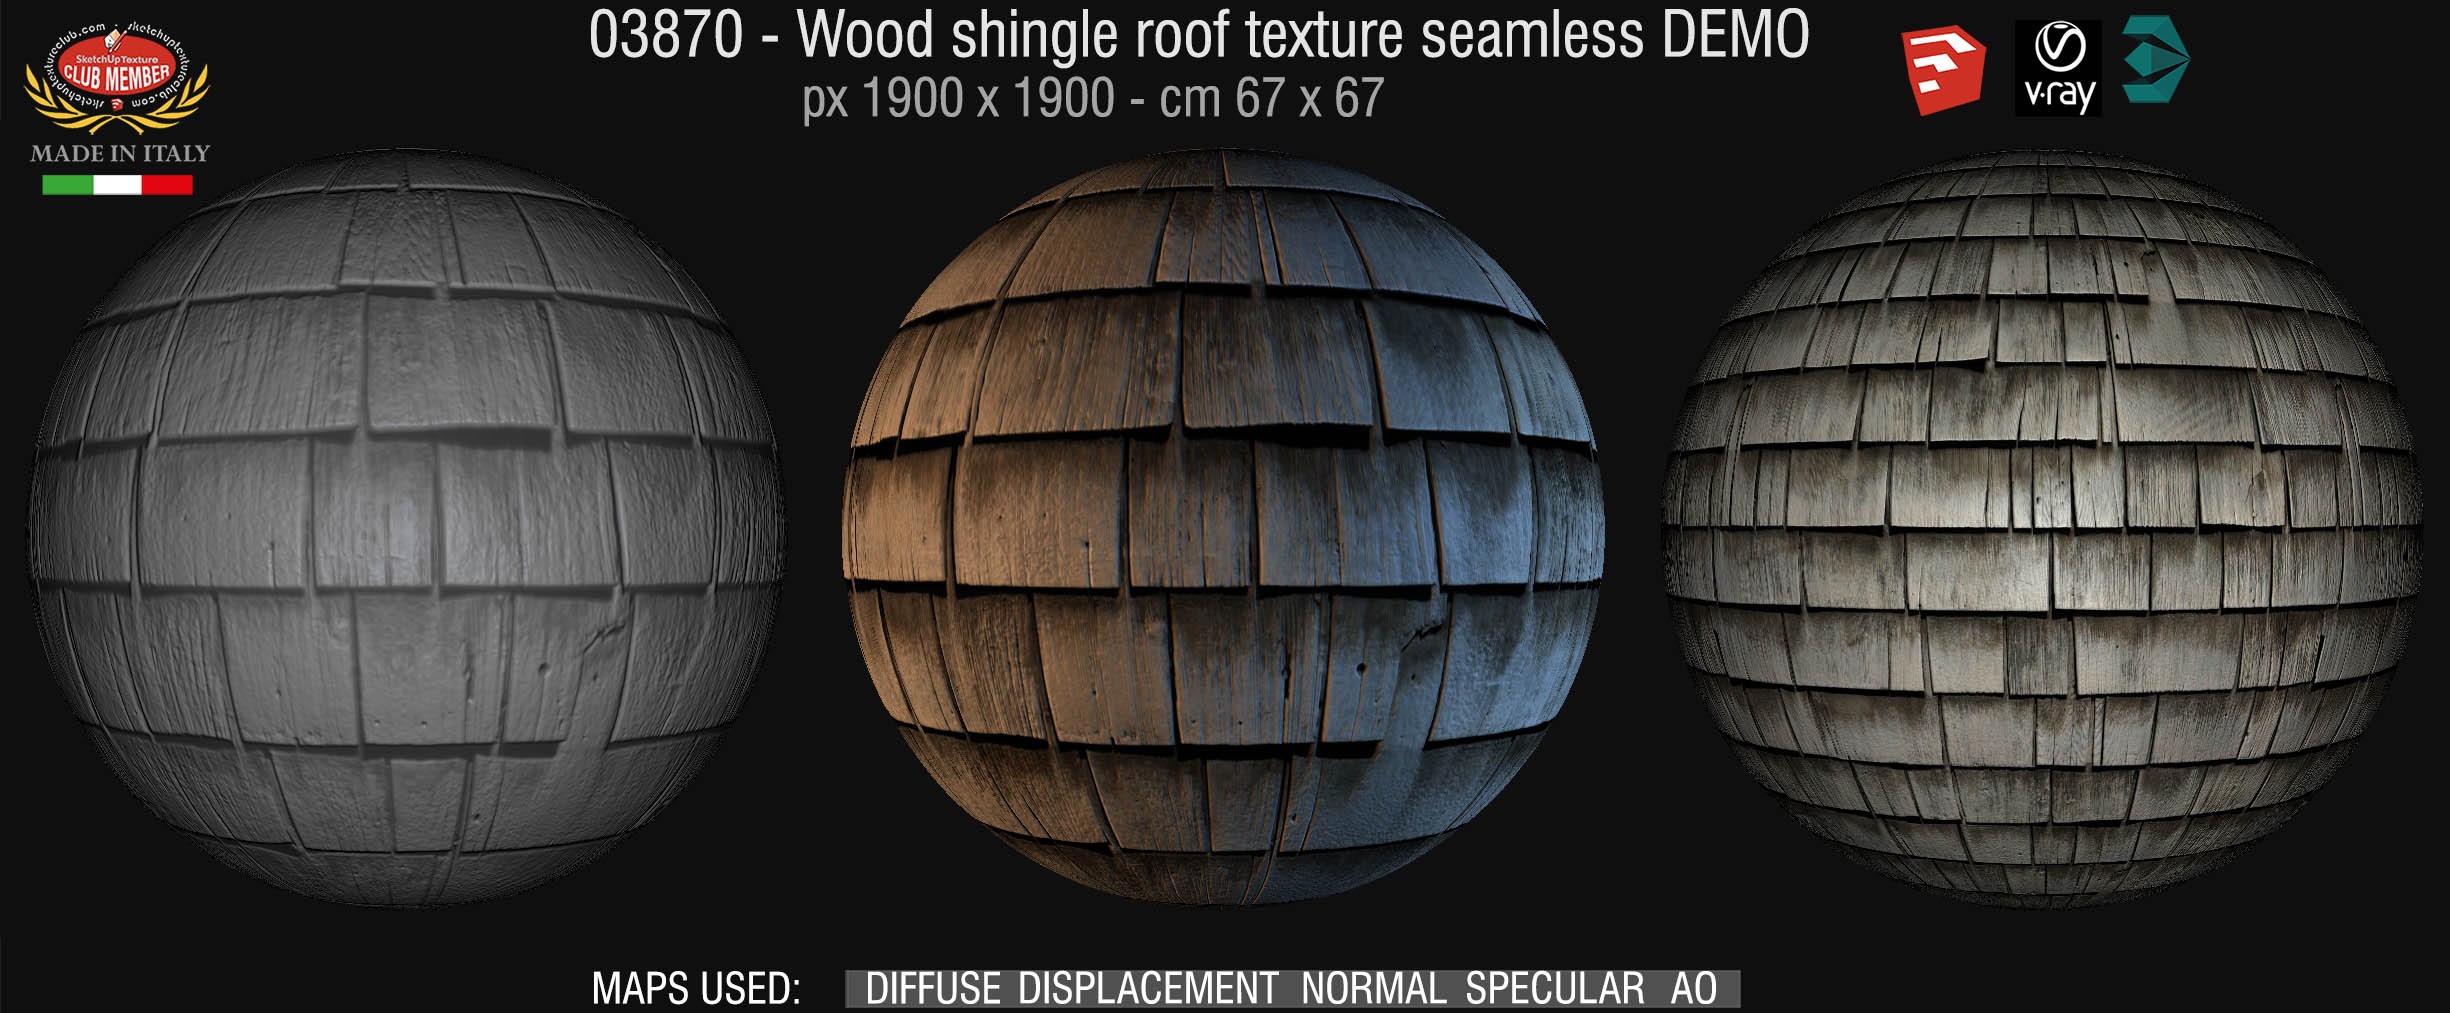 03870 Wood shingle roof texture seamless + maps DEMO